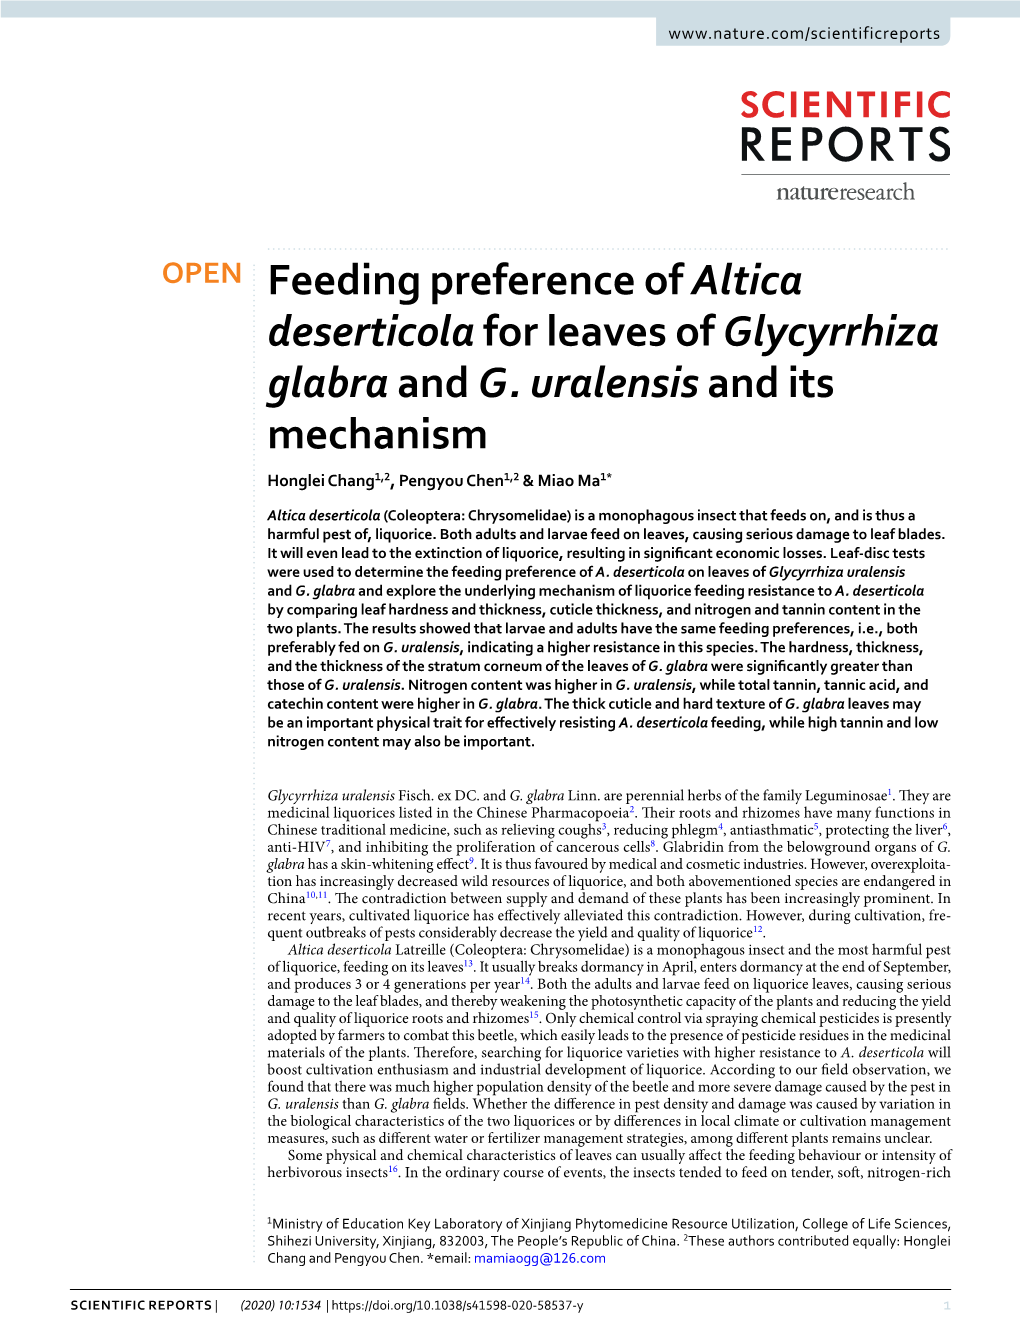 Feeding Preference of Altica Deserticola for Leaves of Glycyrrhiza Glabra and G